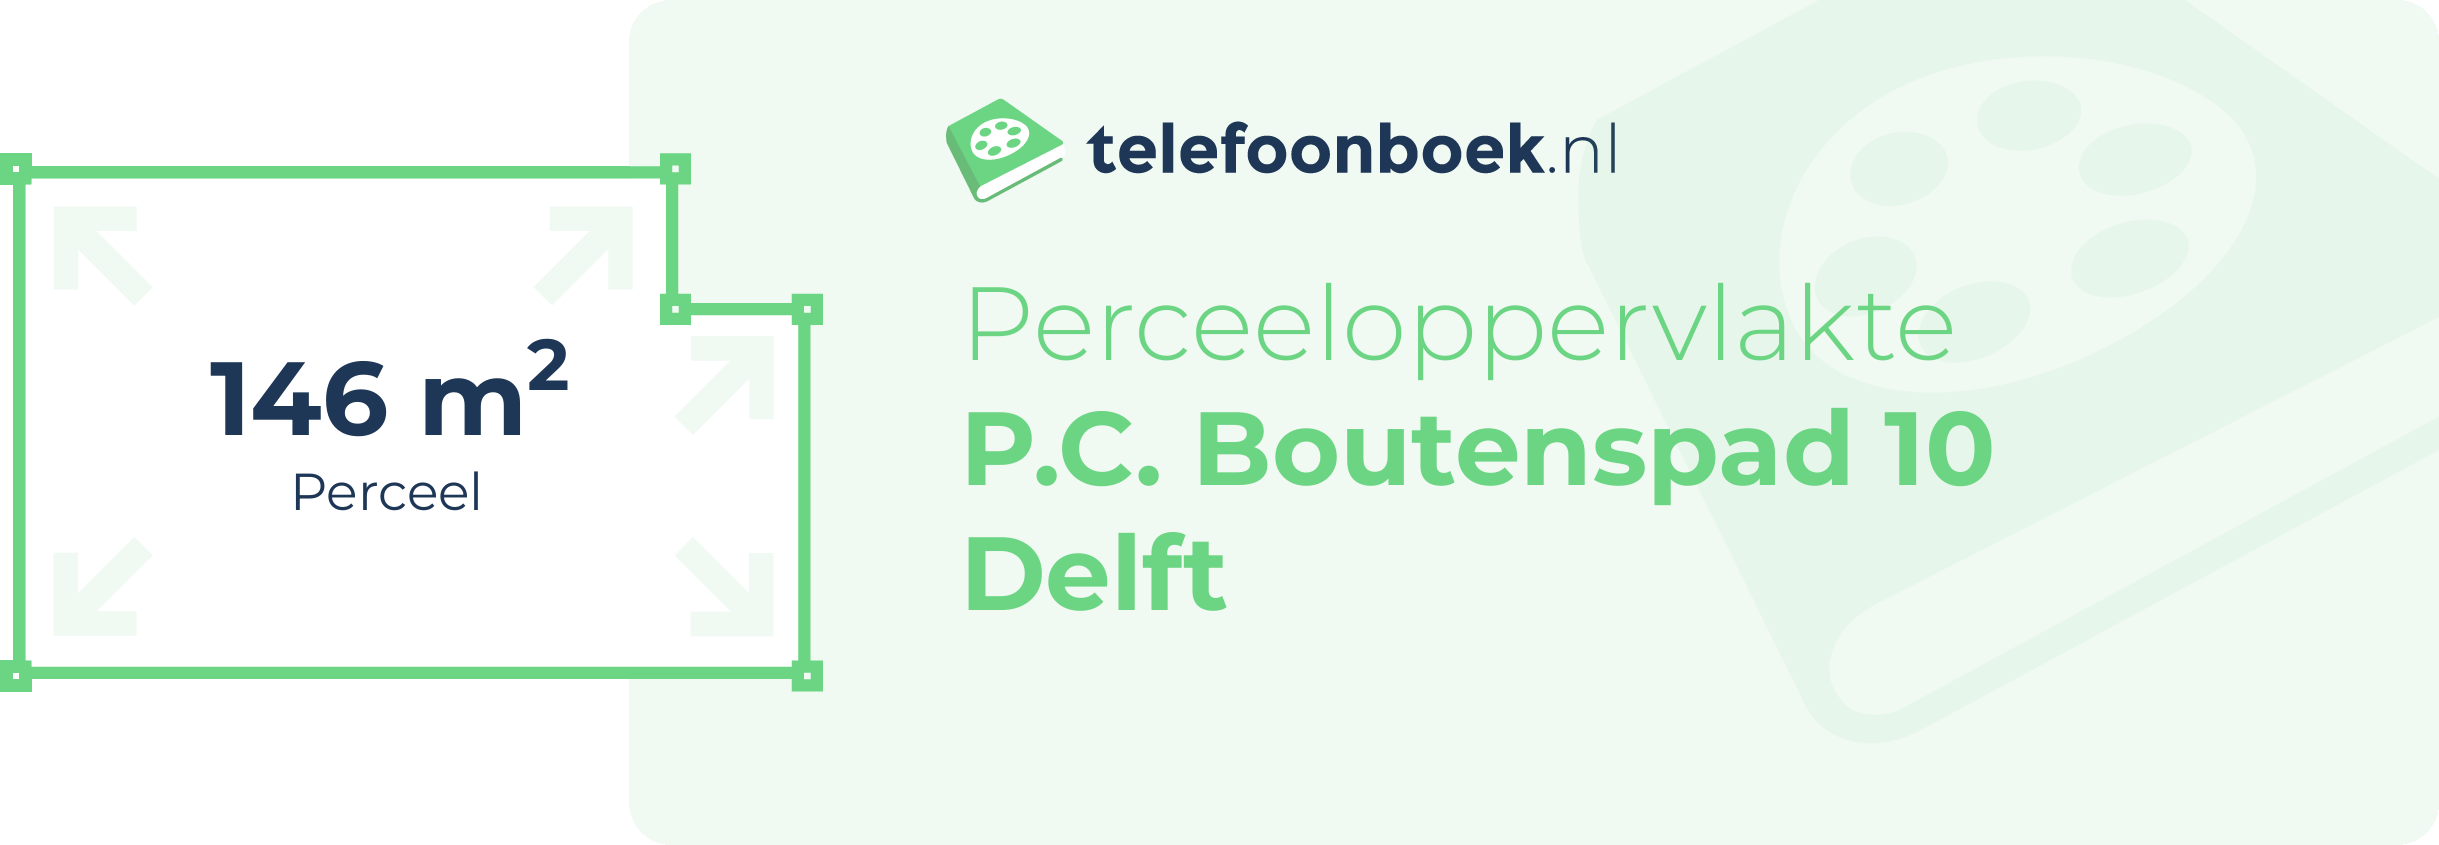 Perceeloppervlakte P.C. Boutenspad 10 Delft